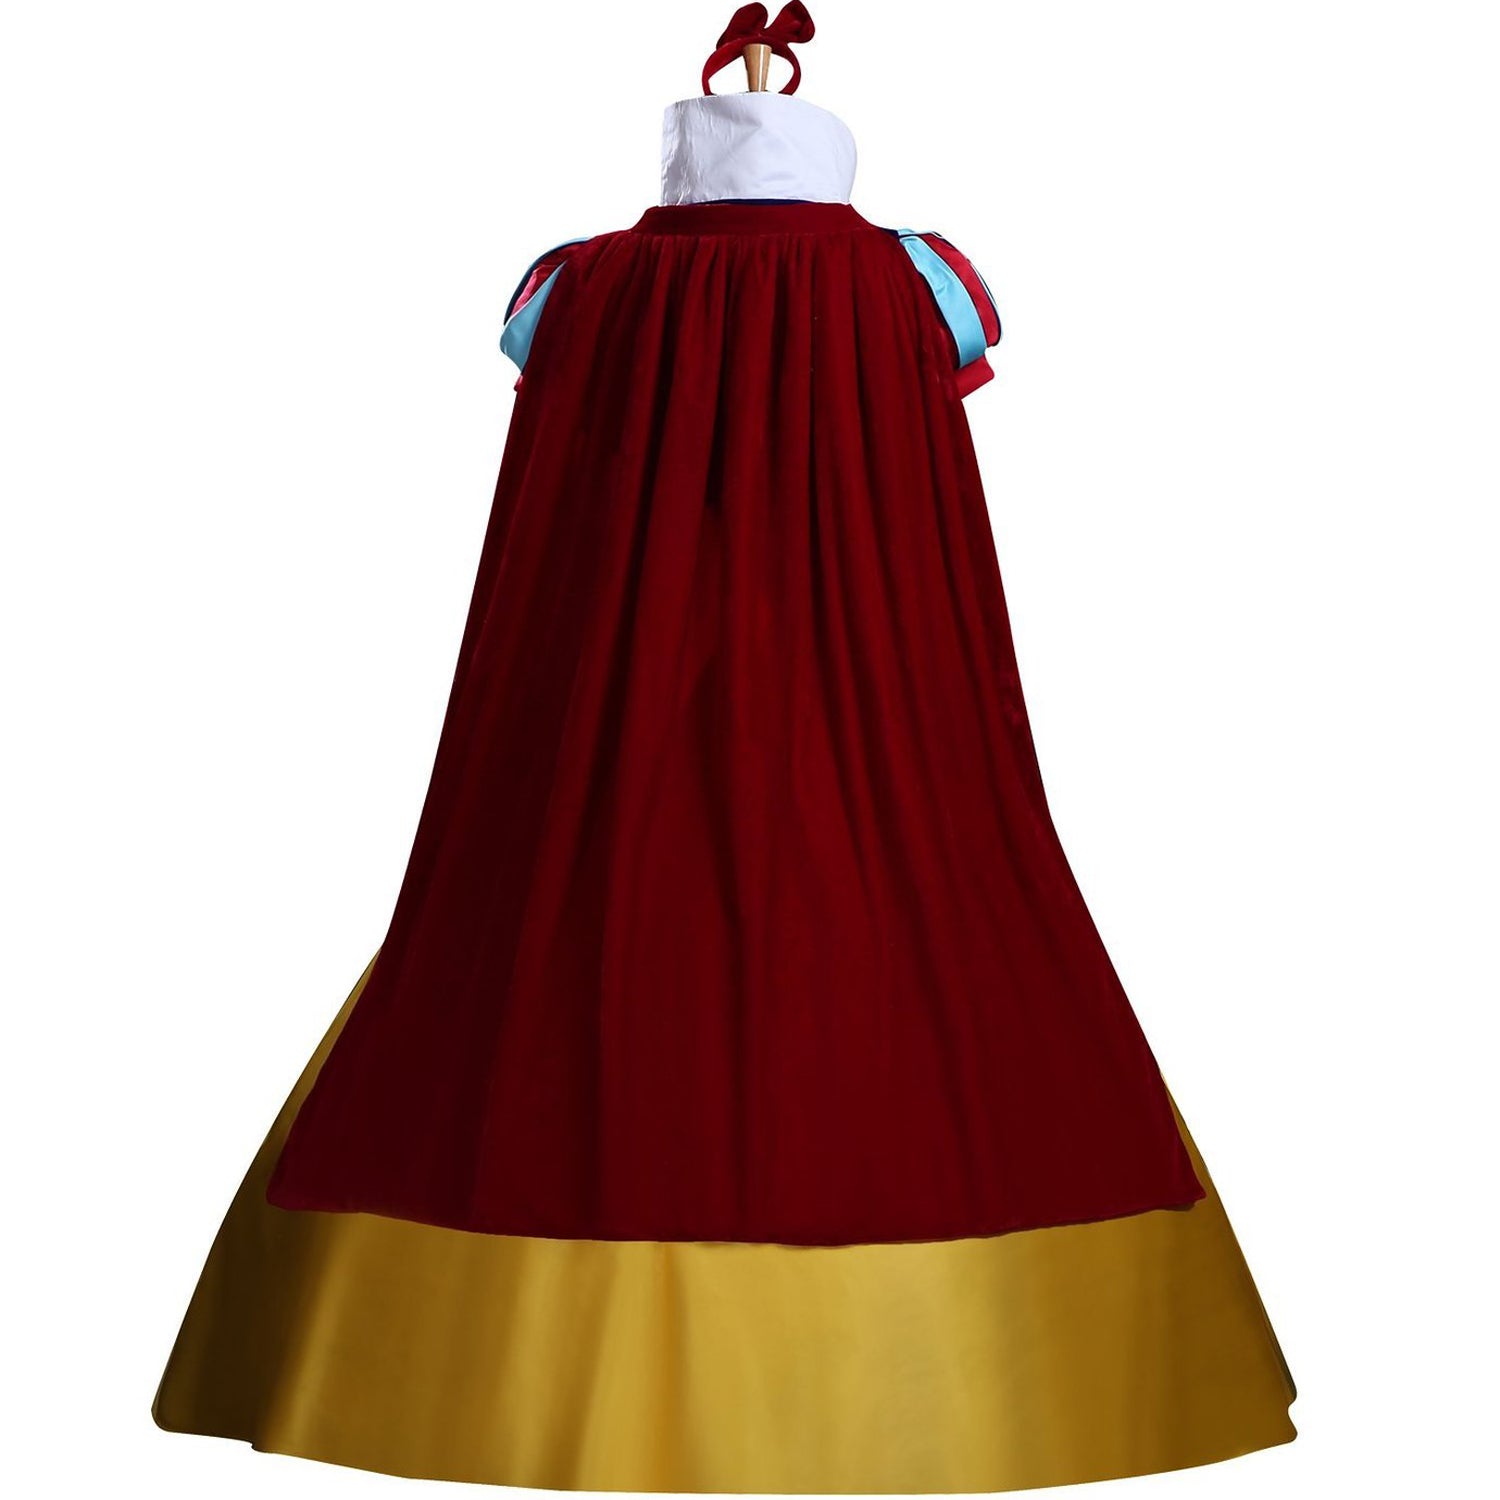 Princess Snow White Costume Cosplay Dress